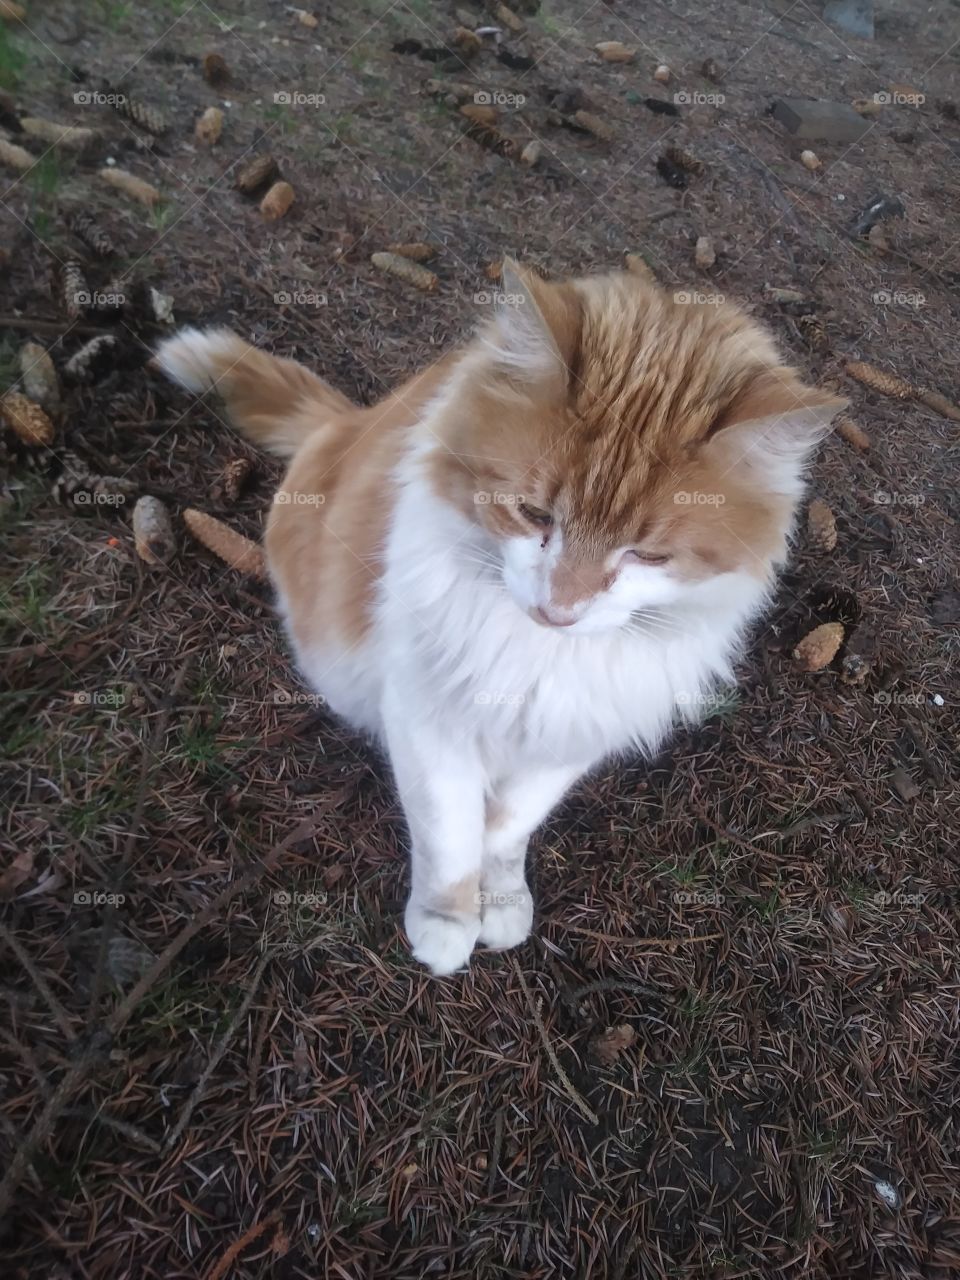 An orange and white cat named Natsu enjoying the day 😻